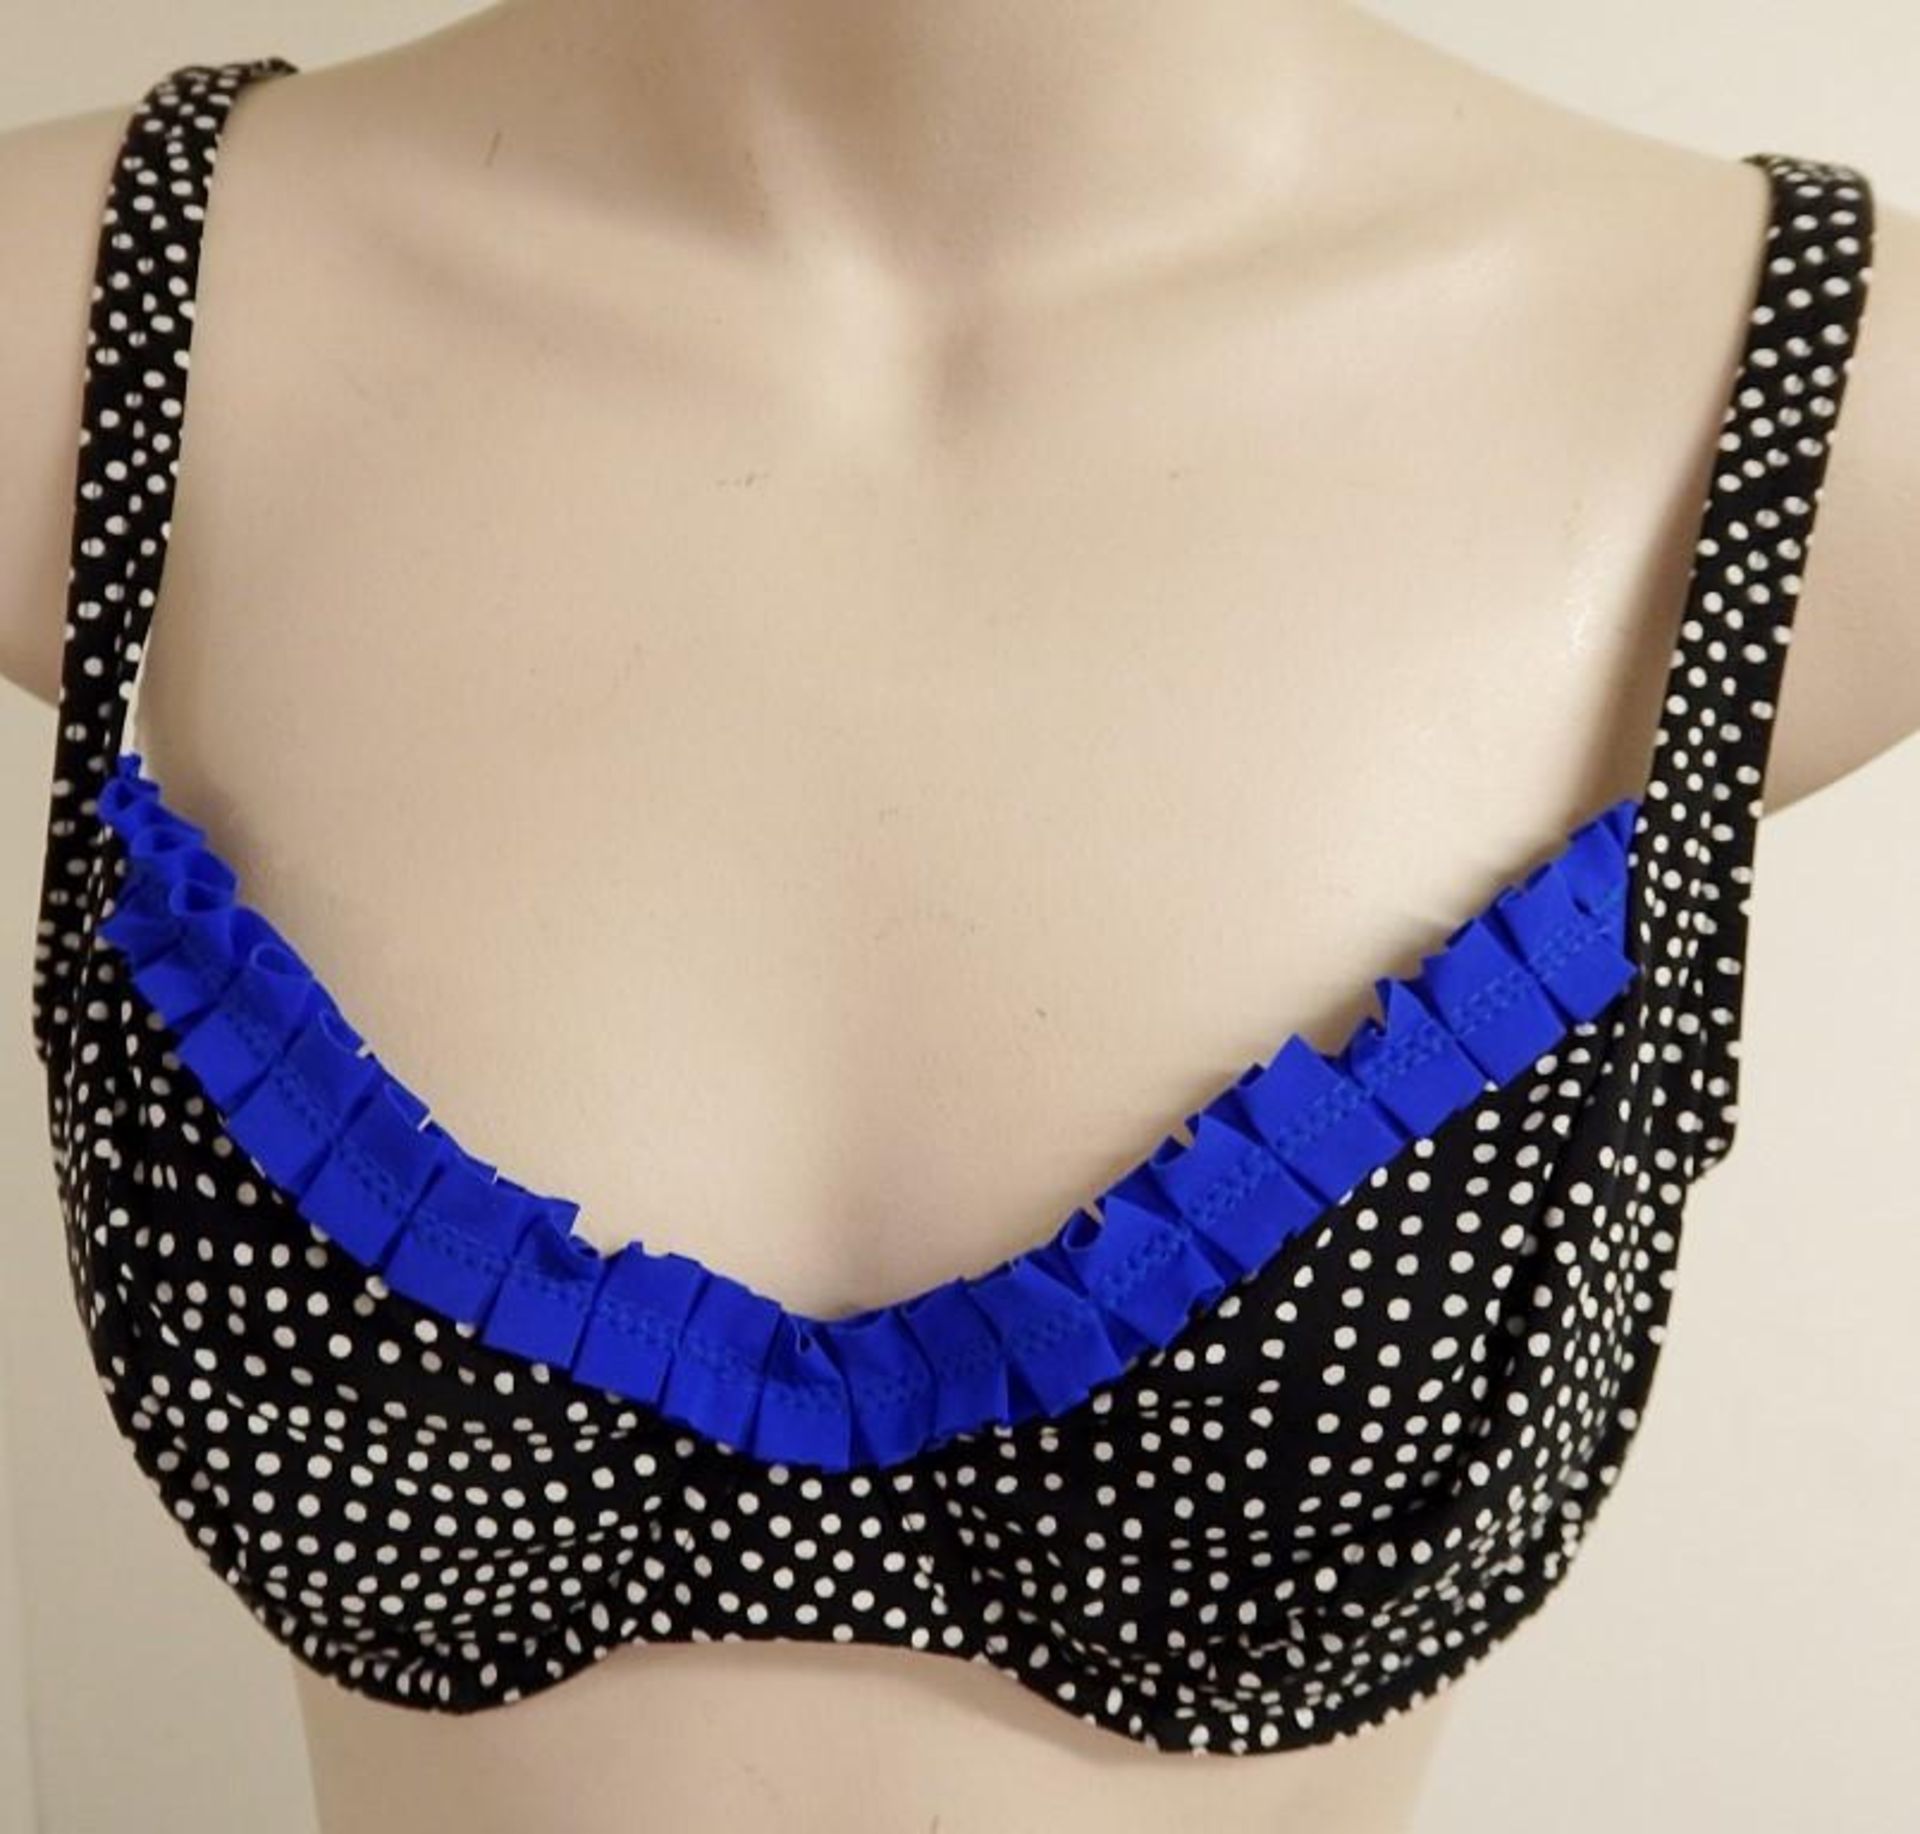 1 x Rasurel - Black Polka dot with royal blue trim &frill Tobago Bikini - B21068 - Size 2C - UK 32 - - Image 9 of 10